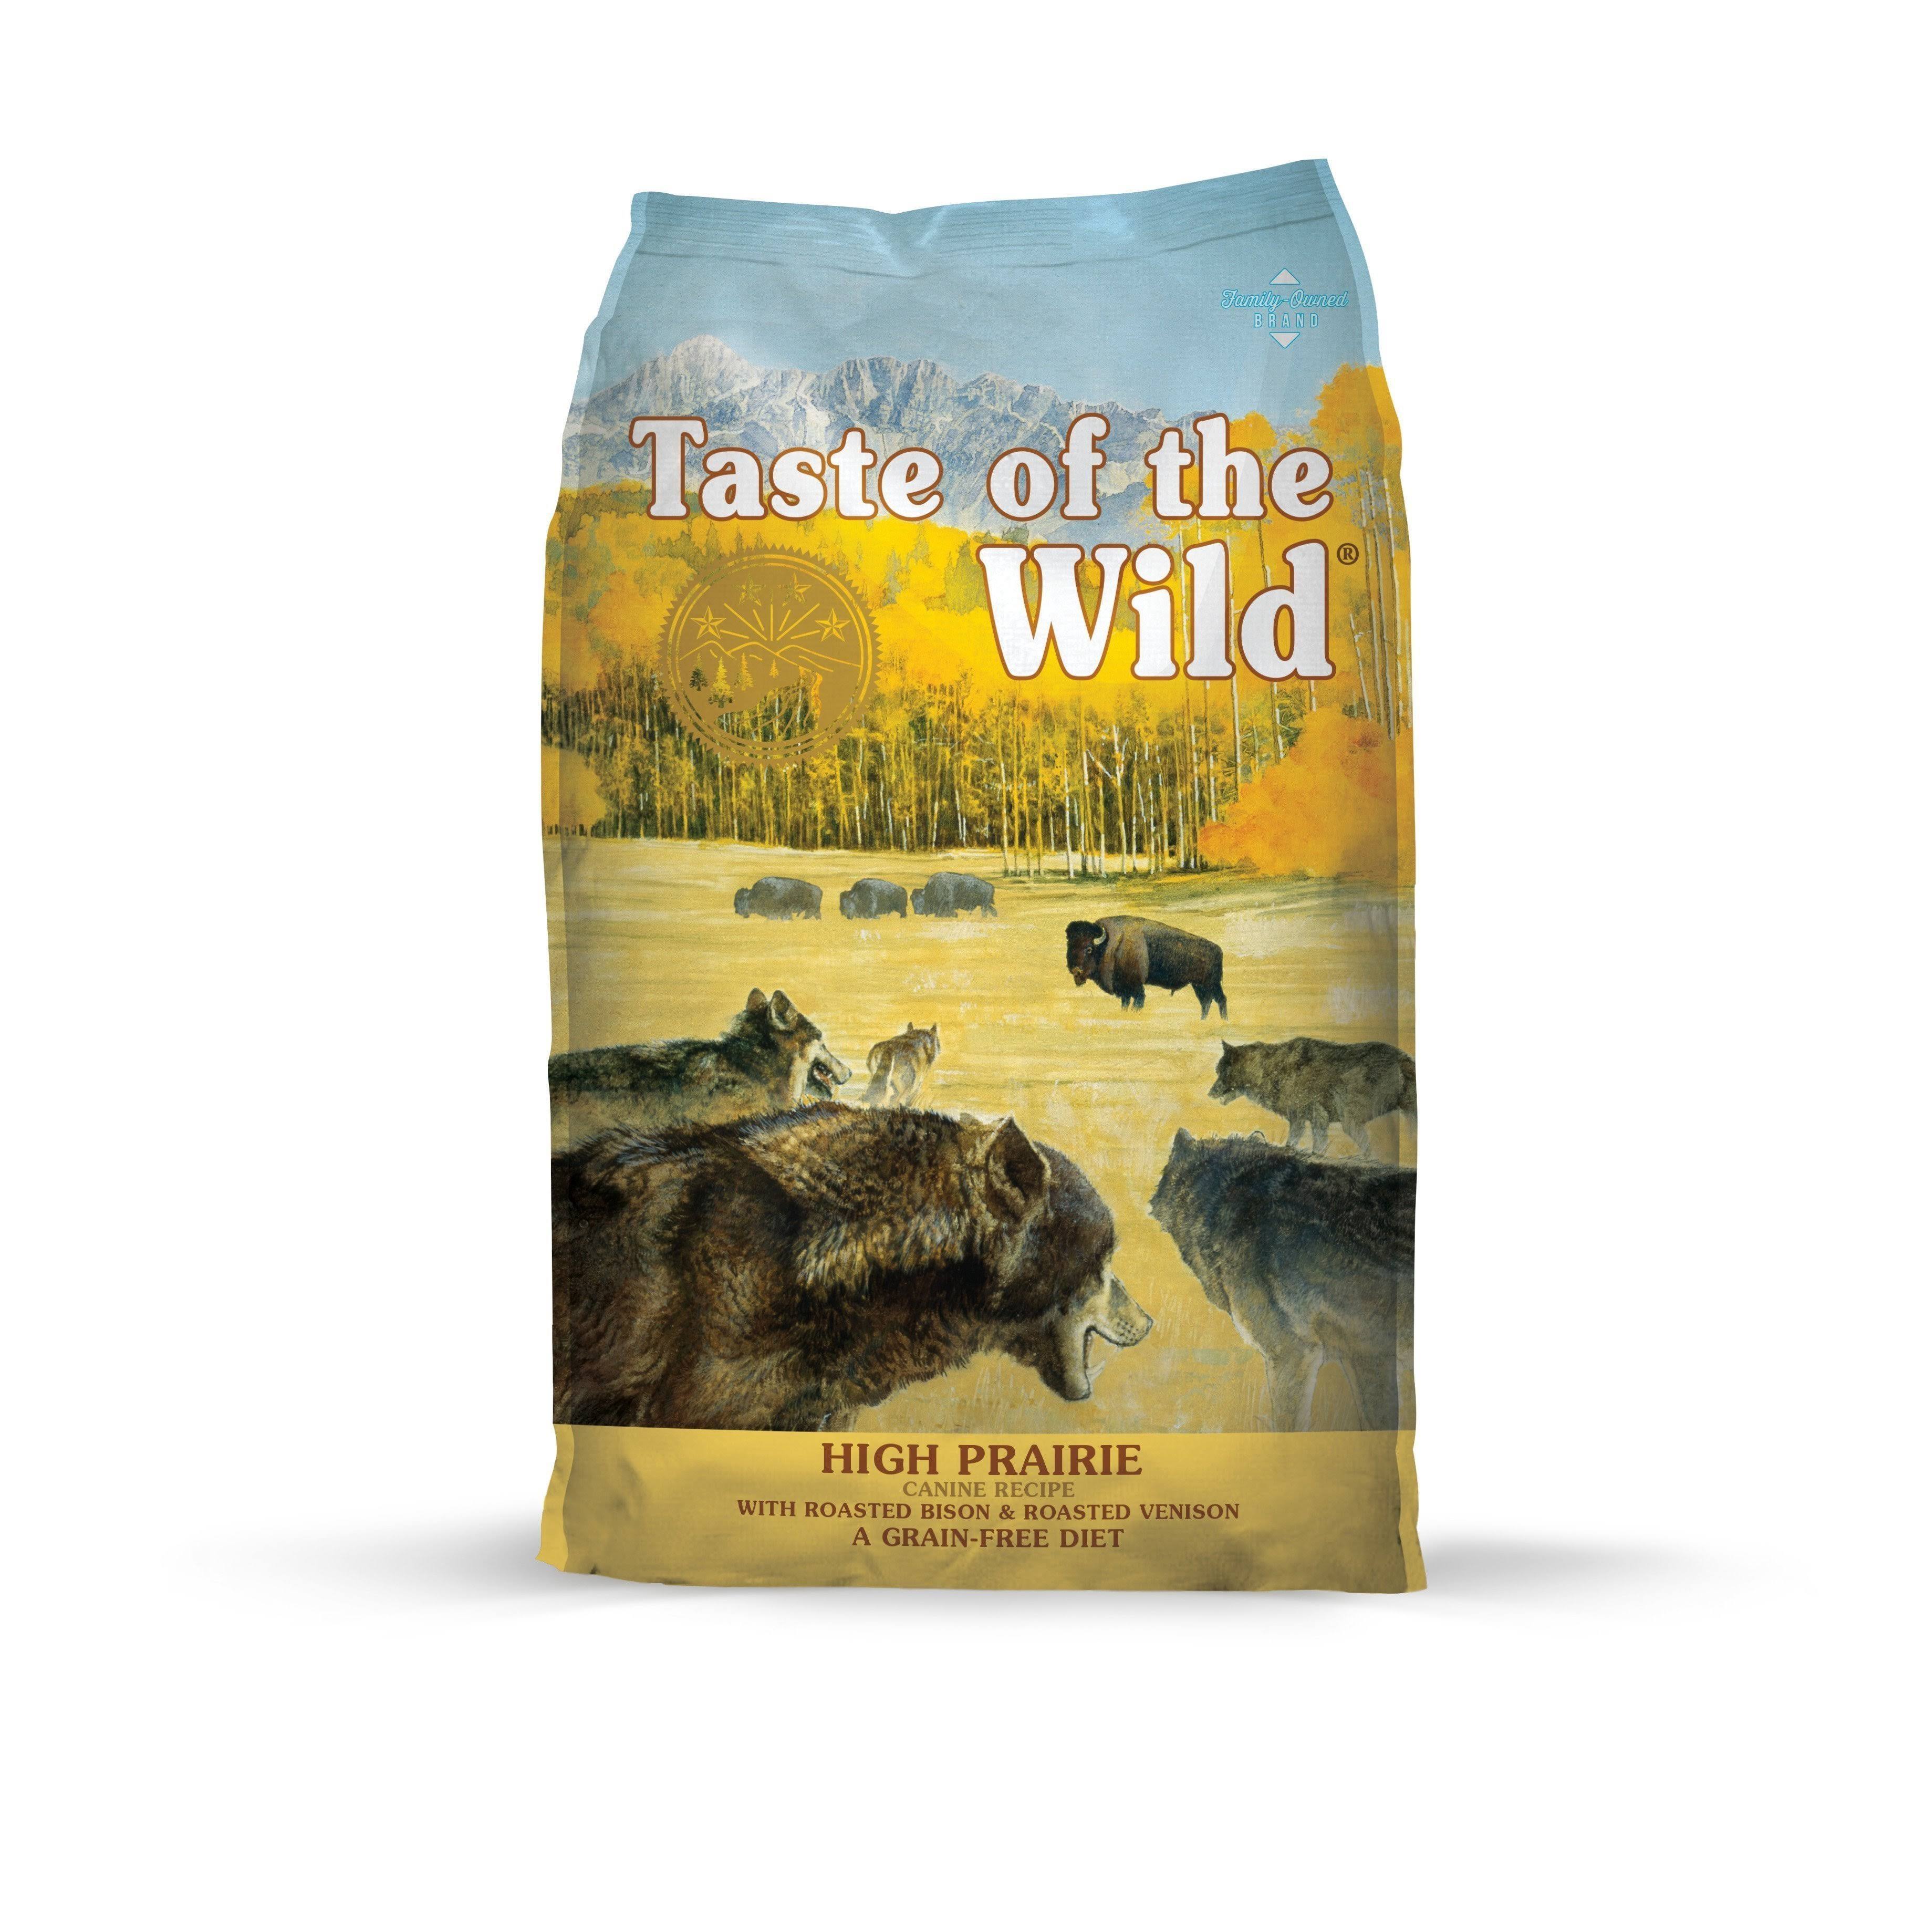 Taste of The Wild Dog Food - Roasted Bison and Roasted Venison